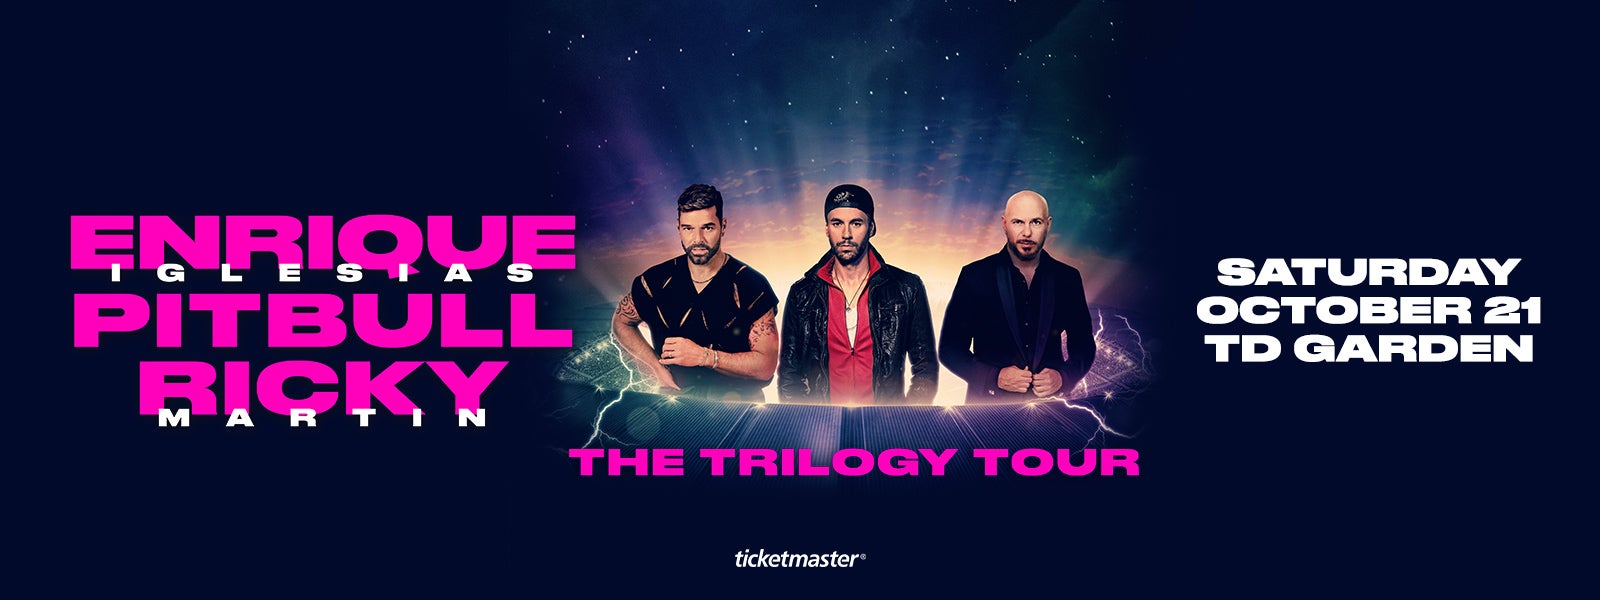 The Trilogy Tour featuring Ricky Martin, Pitbull, and Enrique Iglesias